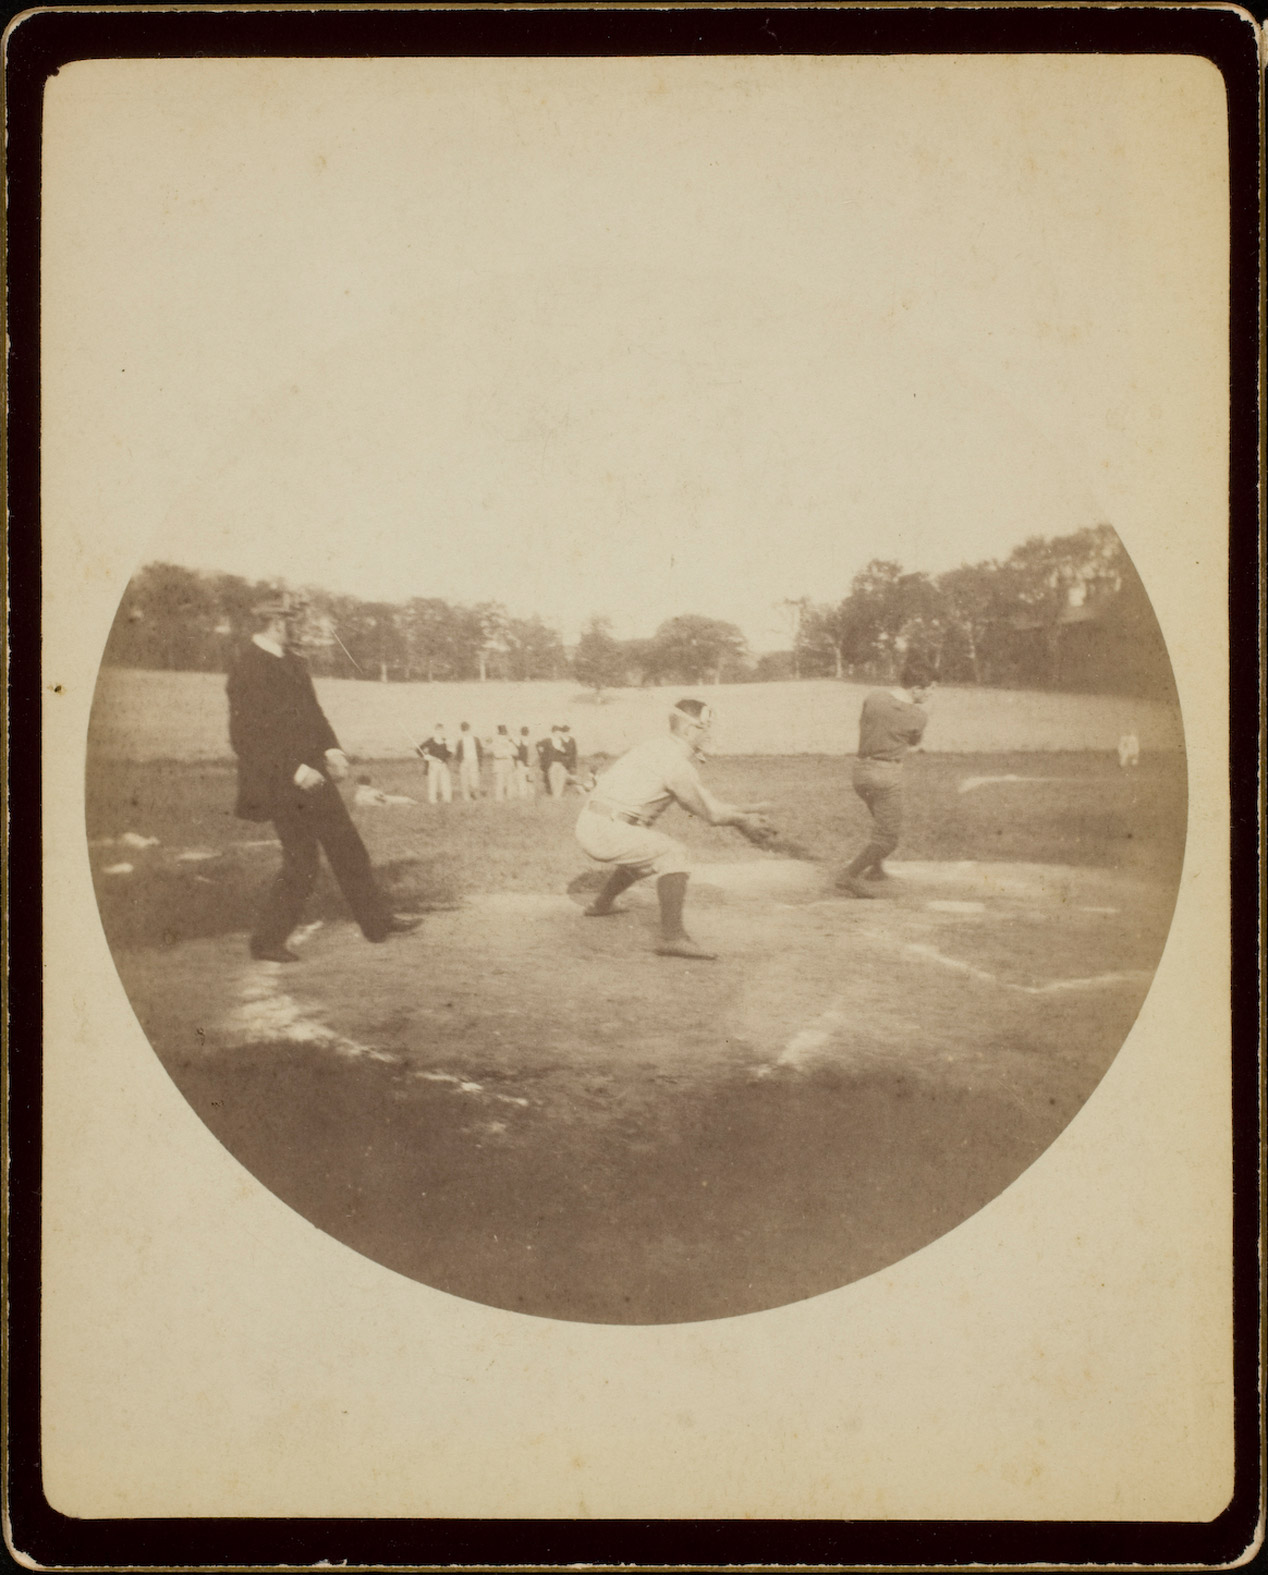 Slocum Howland (American, 1870–1922). No. 2 Kodak snapshot of baseball game at Williston School, Easthampton, MA, ca. 1890. Albumen silver print. Museum Collection.